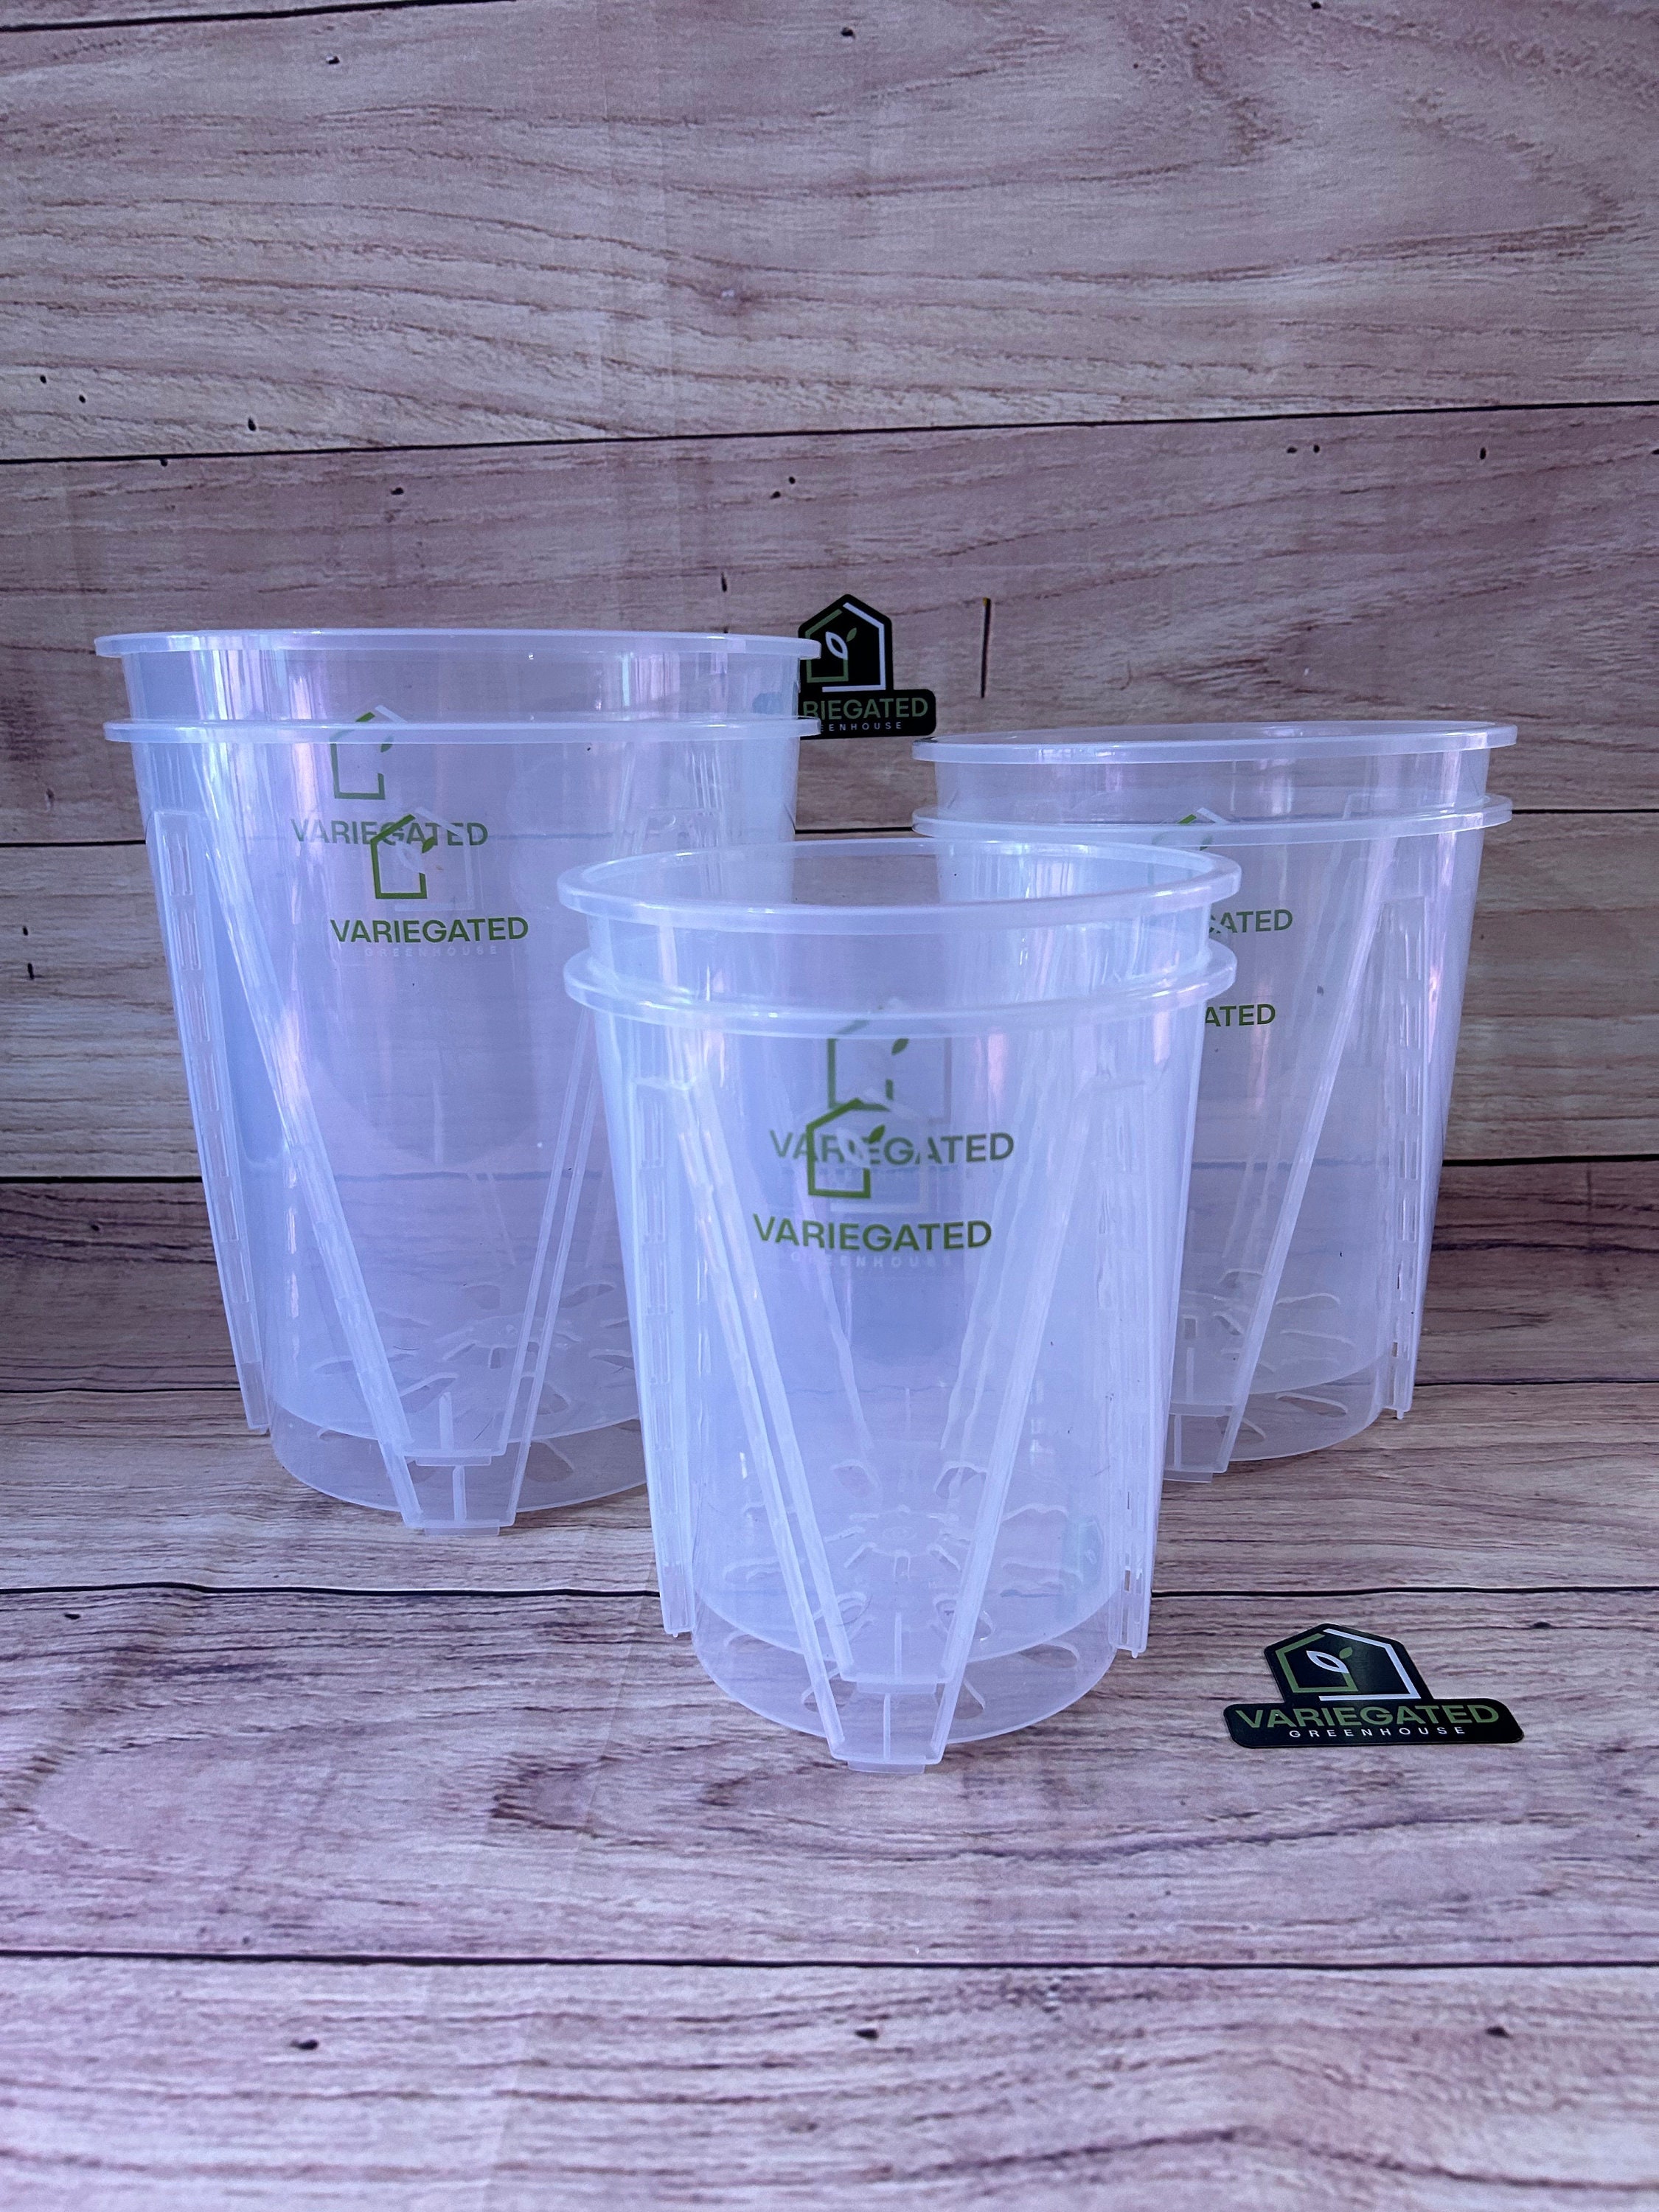 6-Inch Transparent Plastic Planter Plant Nursery Pots with